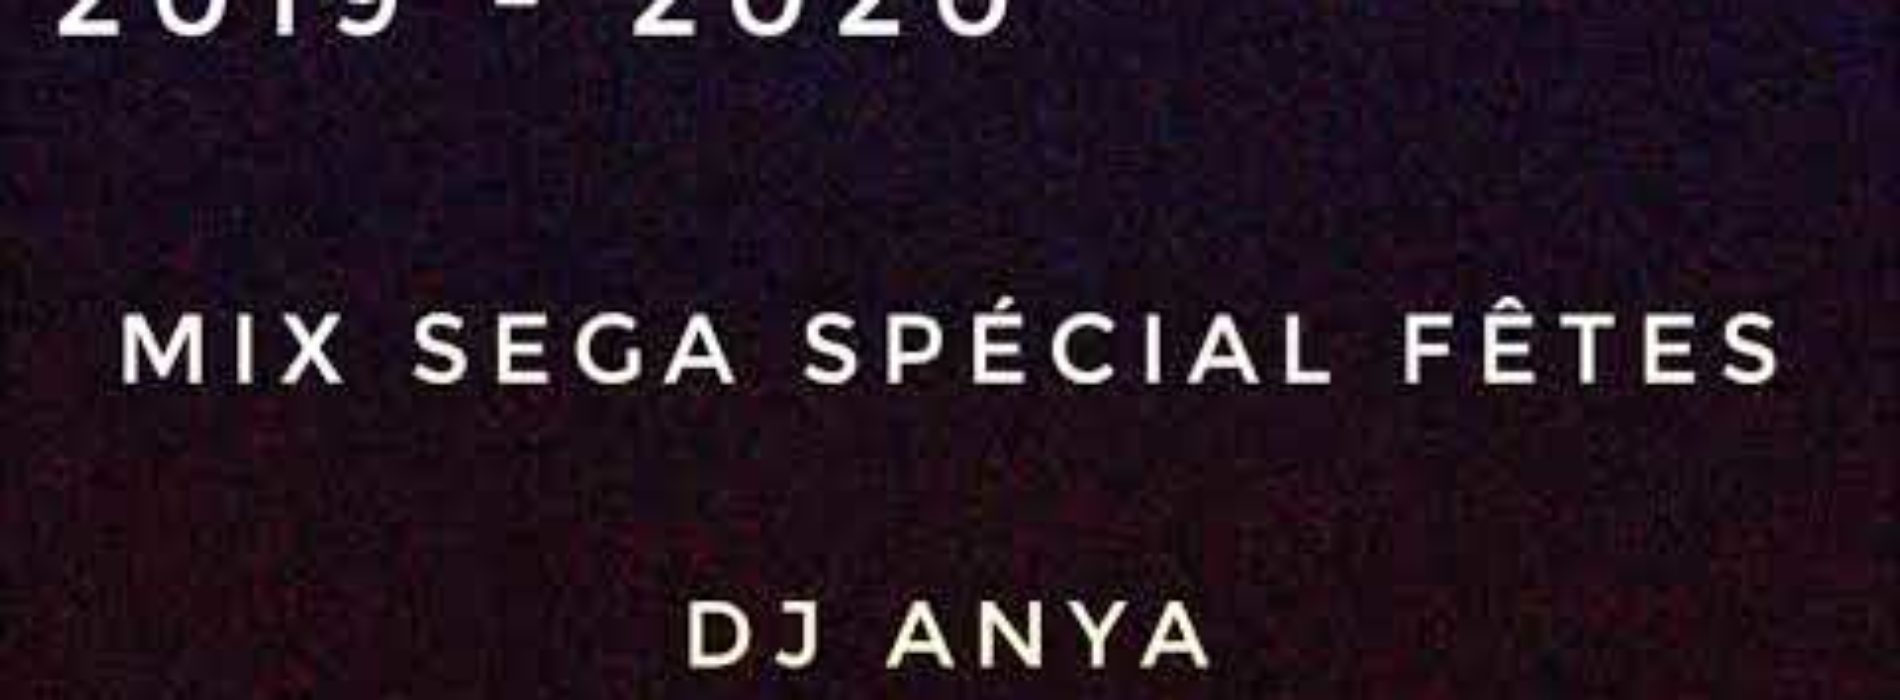 Mix Séga Spécial Fêtes – DJ ANYA (2019) – Décembre 2019